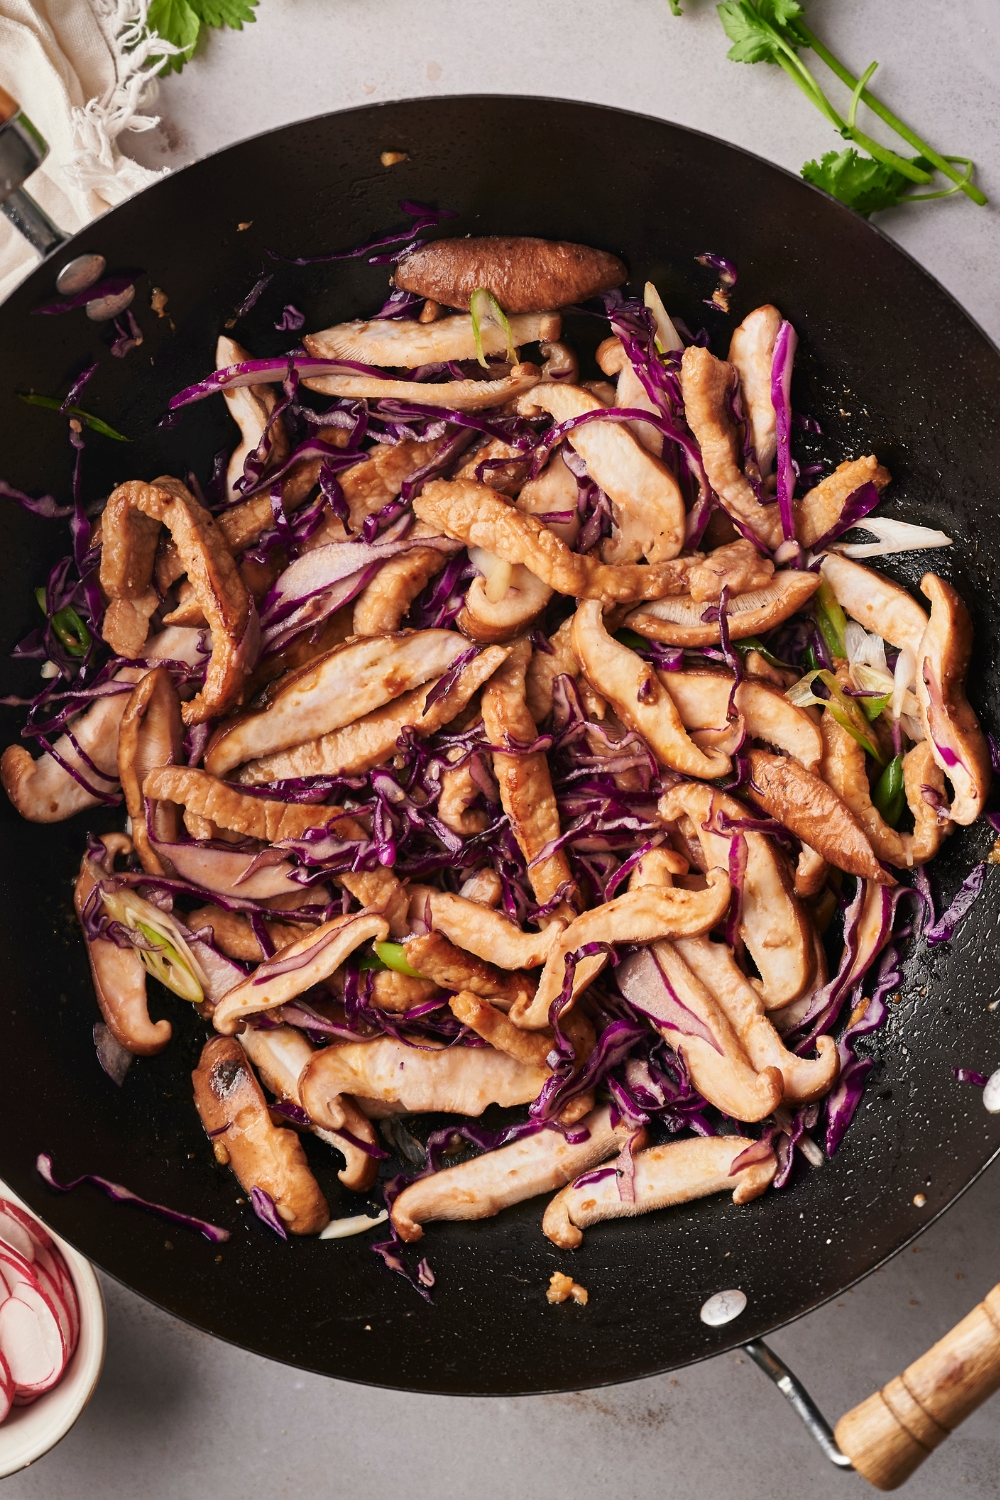 Moo shu pork and shredded purple cabbage in a wok.